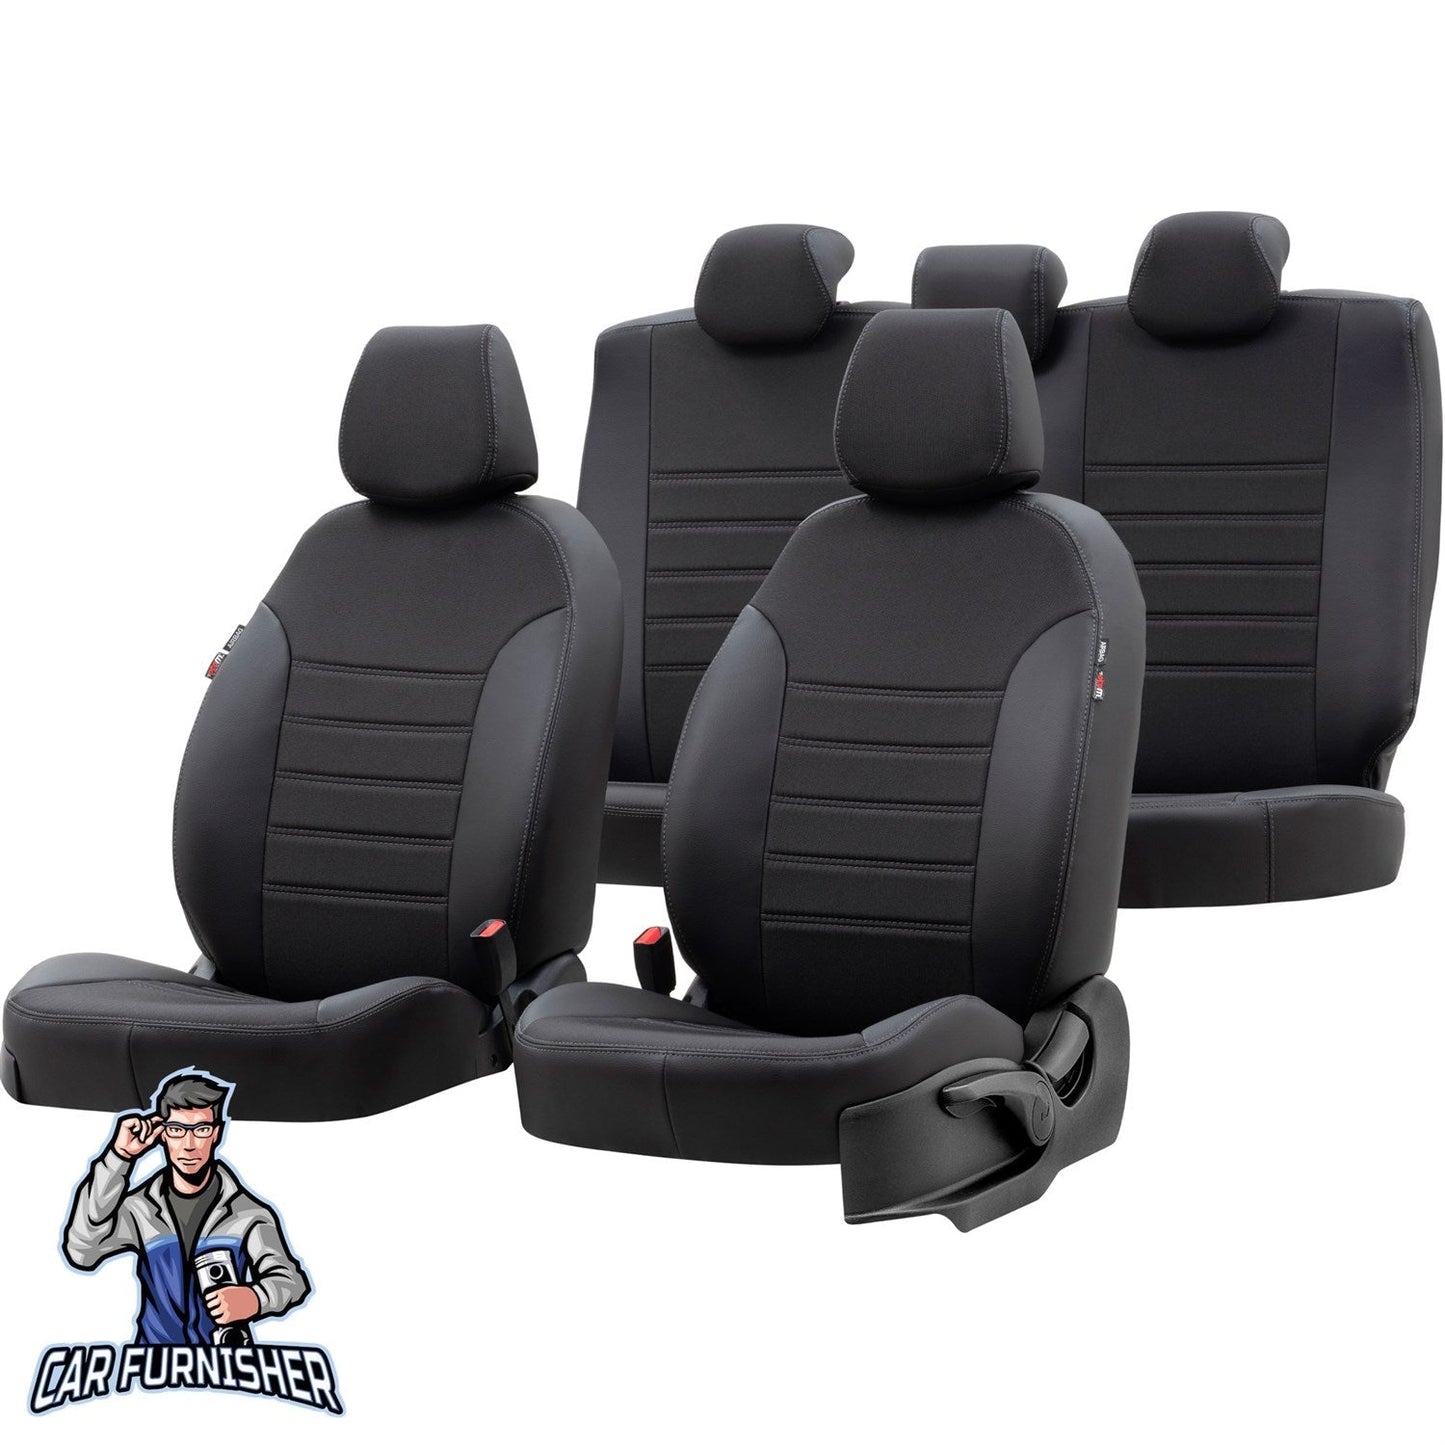 Volkswagen T-Cross Seat Cover Original Jacquard Design Black Leather & Jacquard Fabric